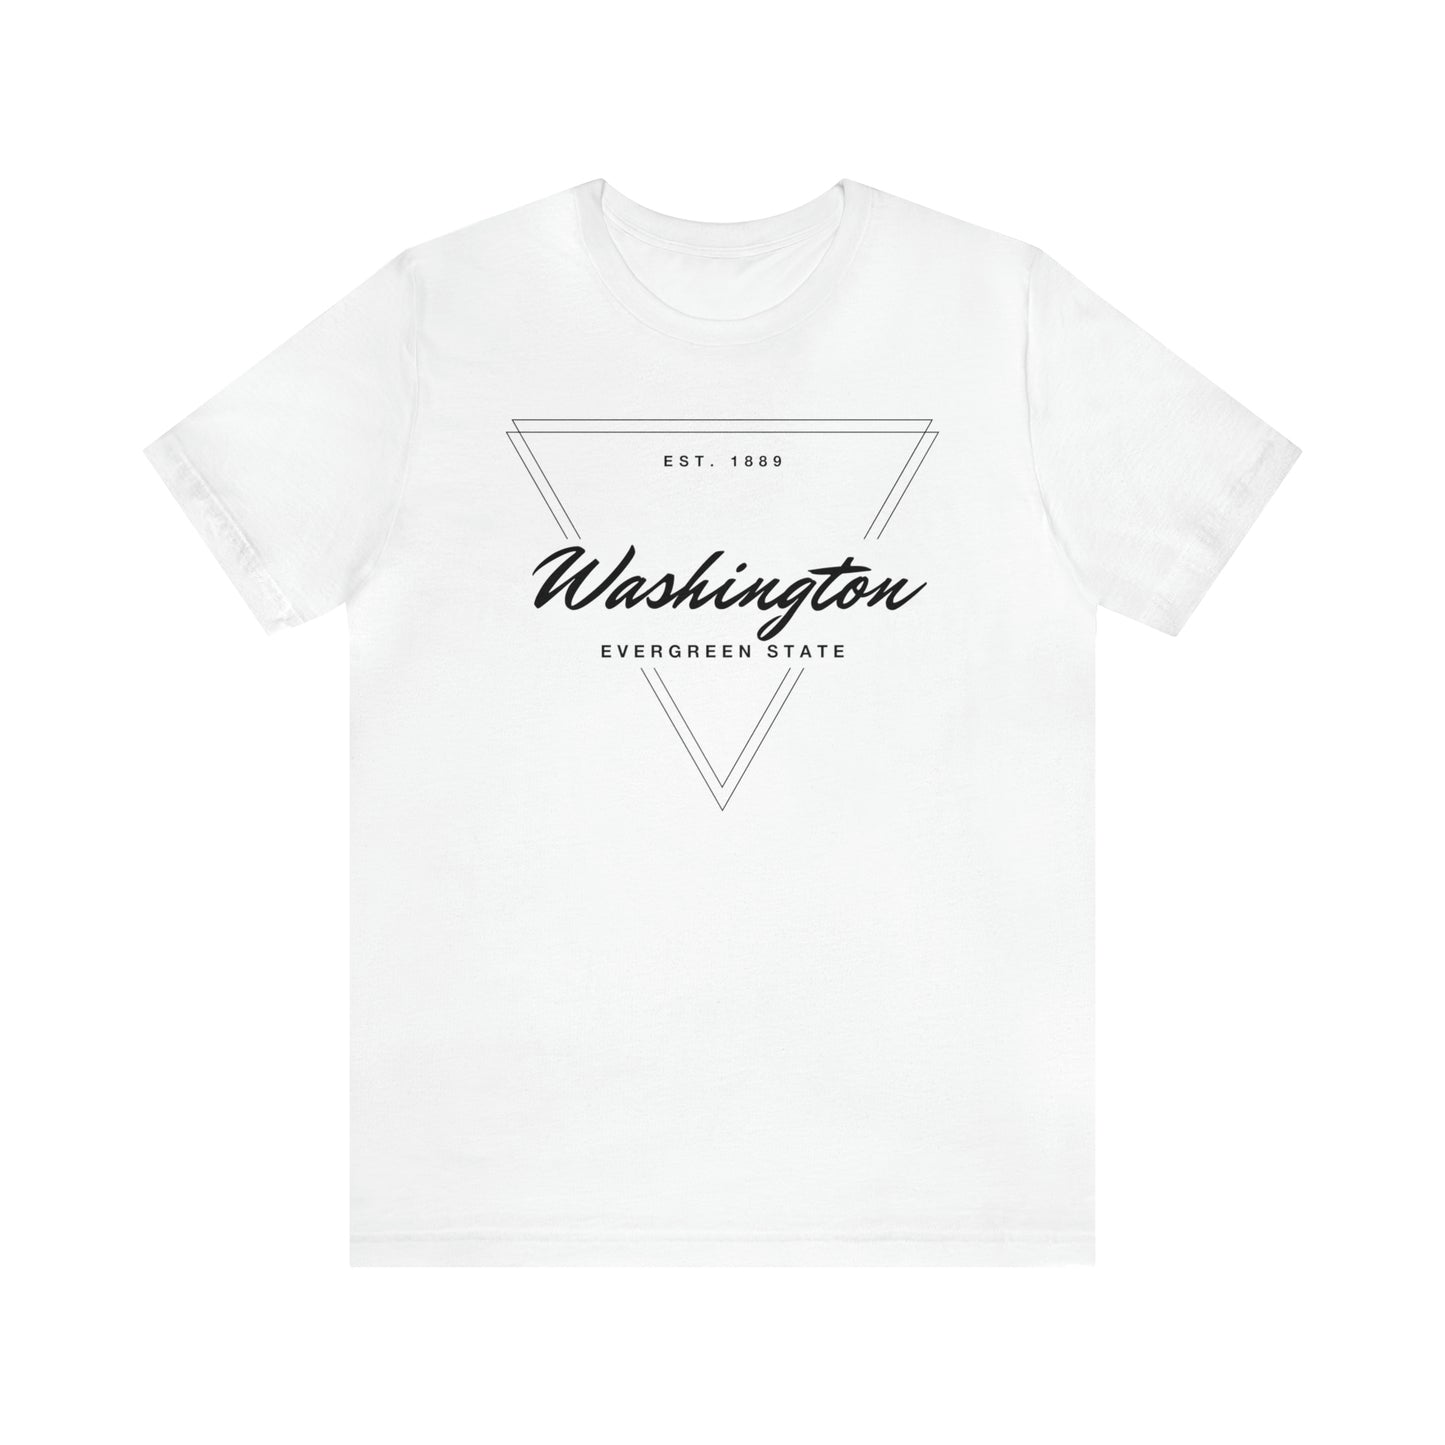 Washington Geometric Shirt